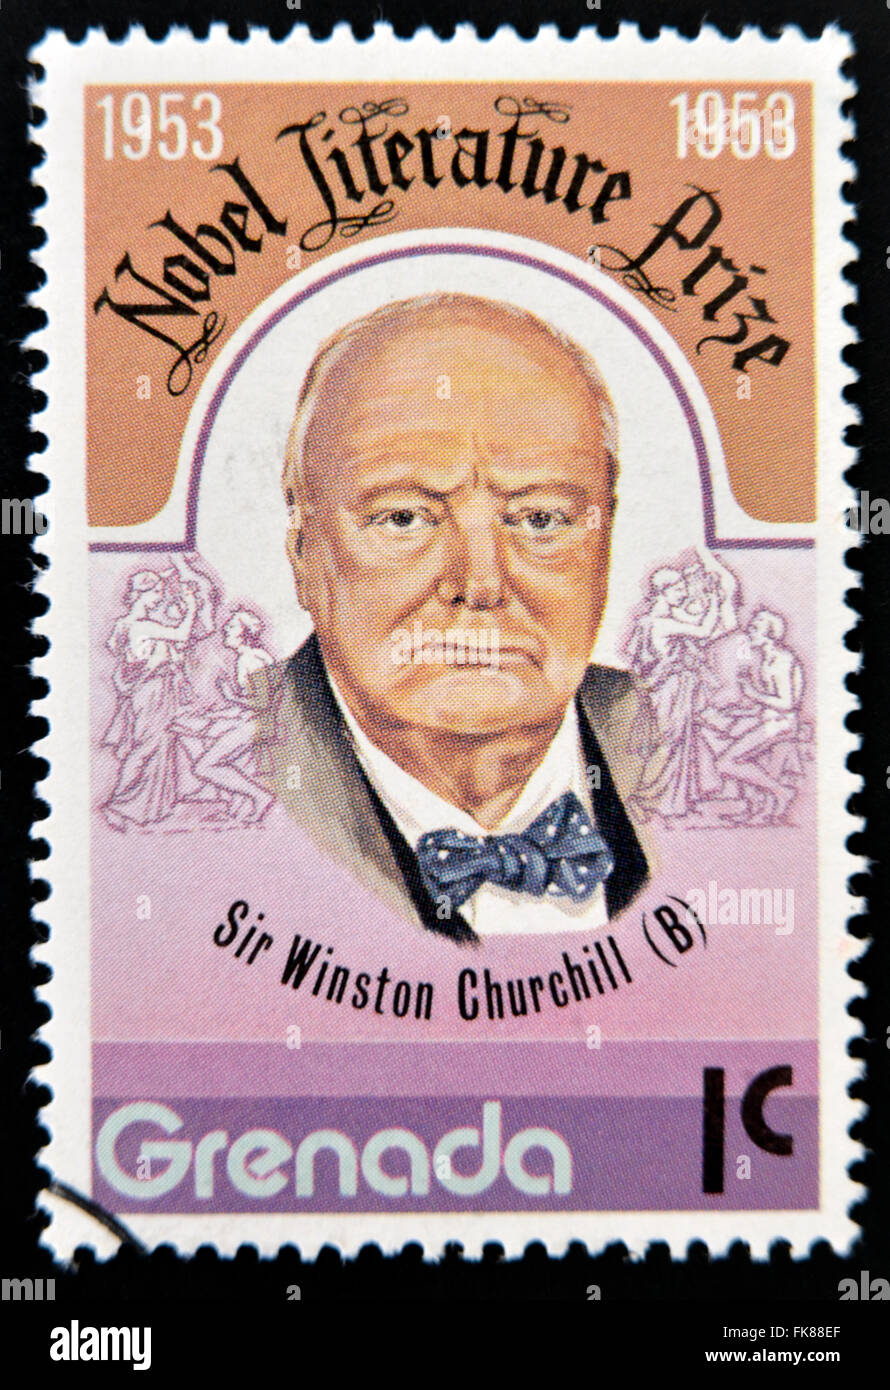 GRENADA - CIRCA 1953: A stamp printed in Grenada shows Sir Winston Churchill, nobel literature prize, circa 1953 Stock Photo